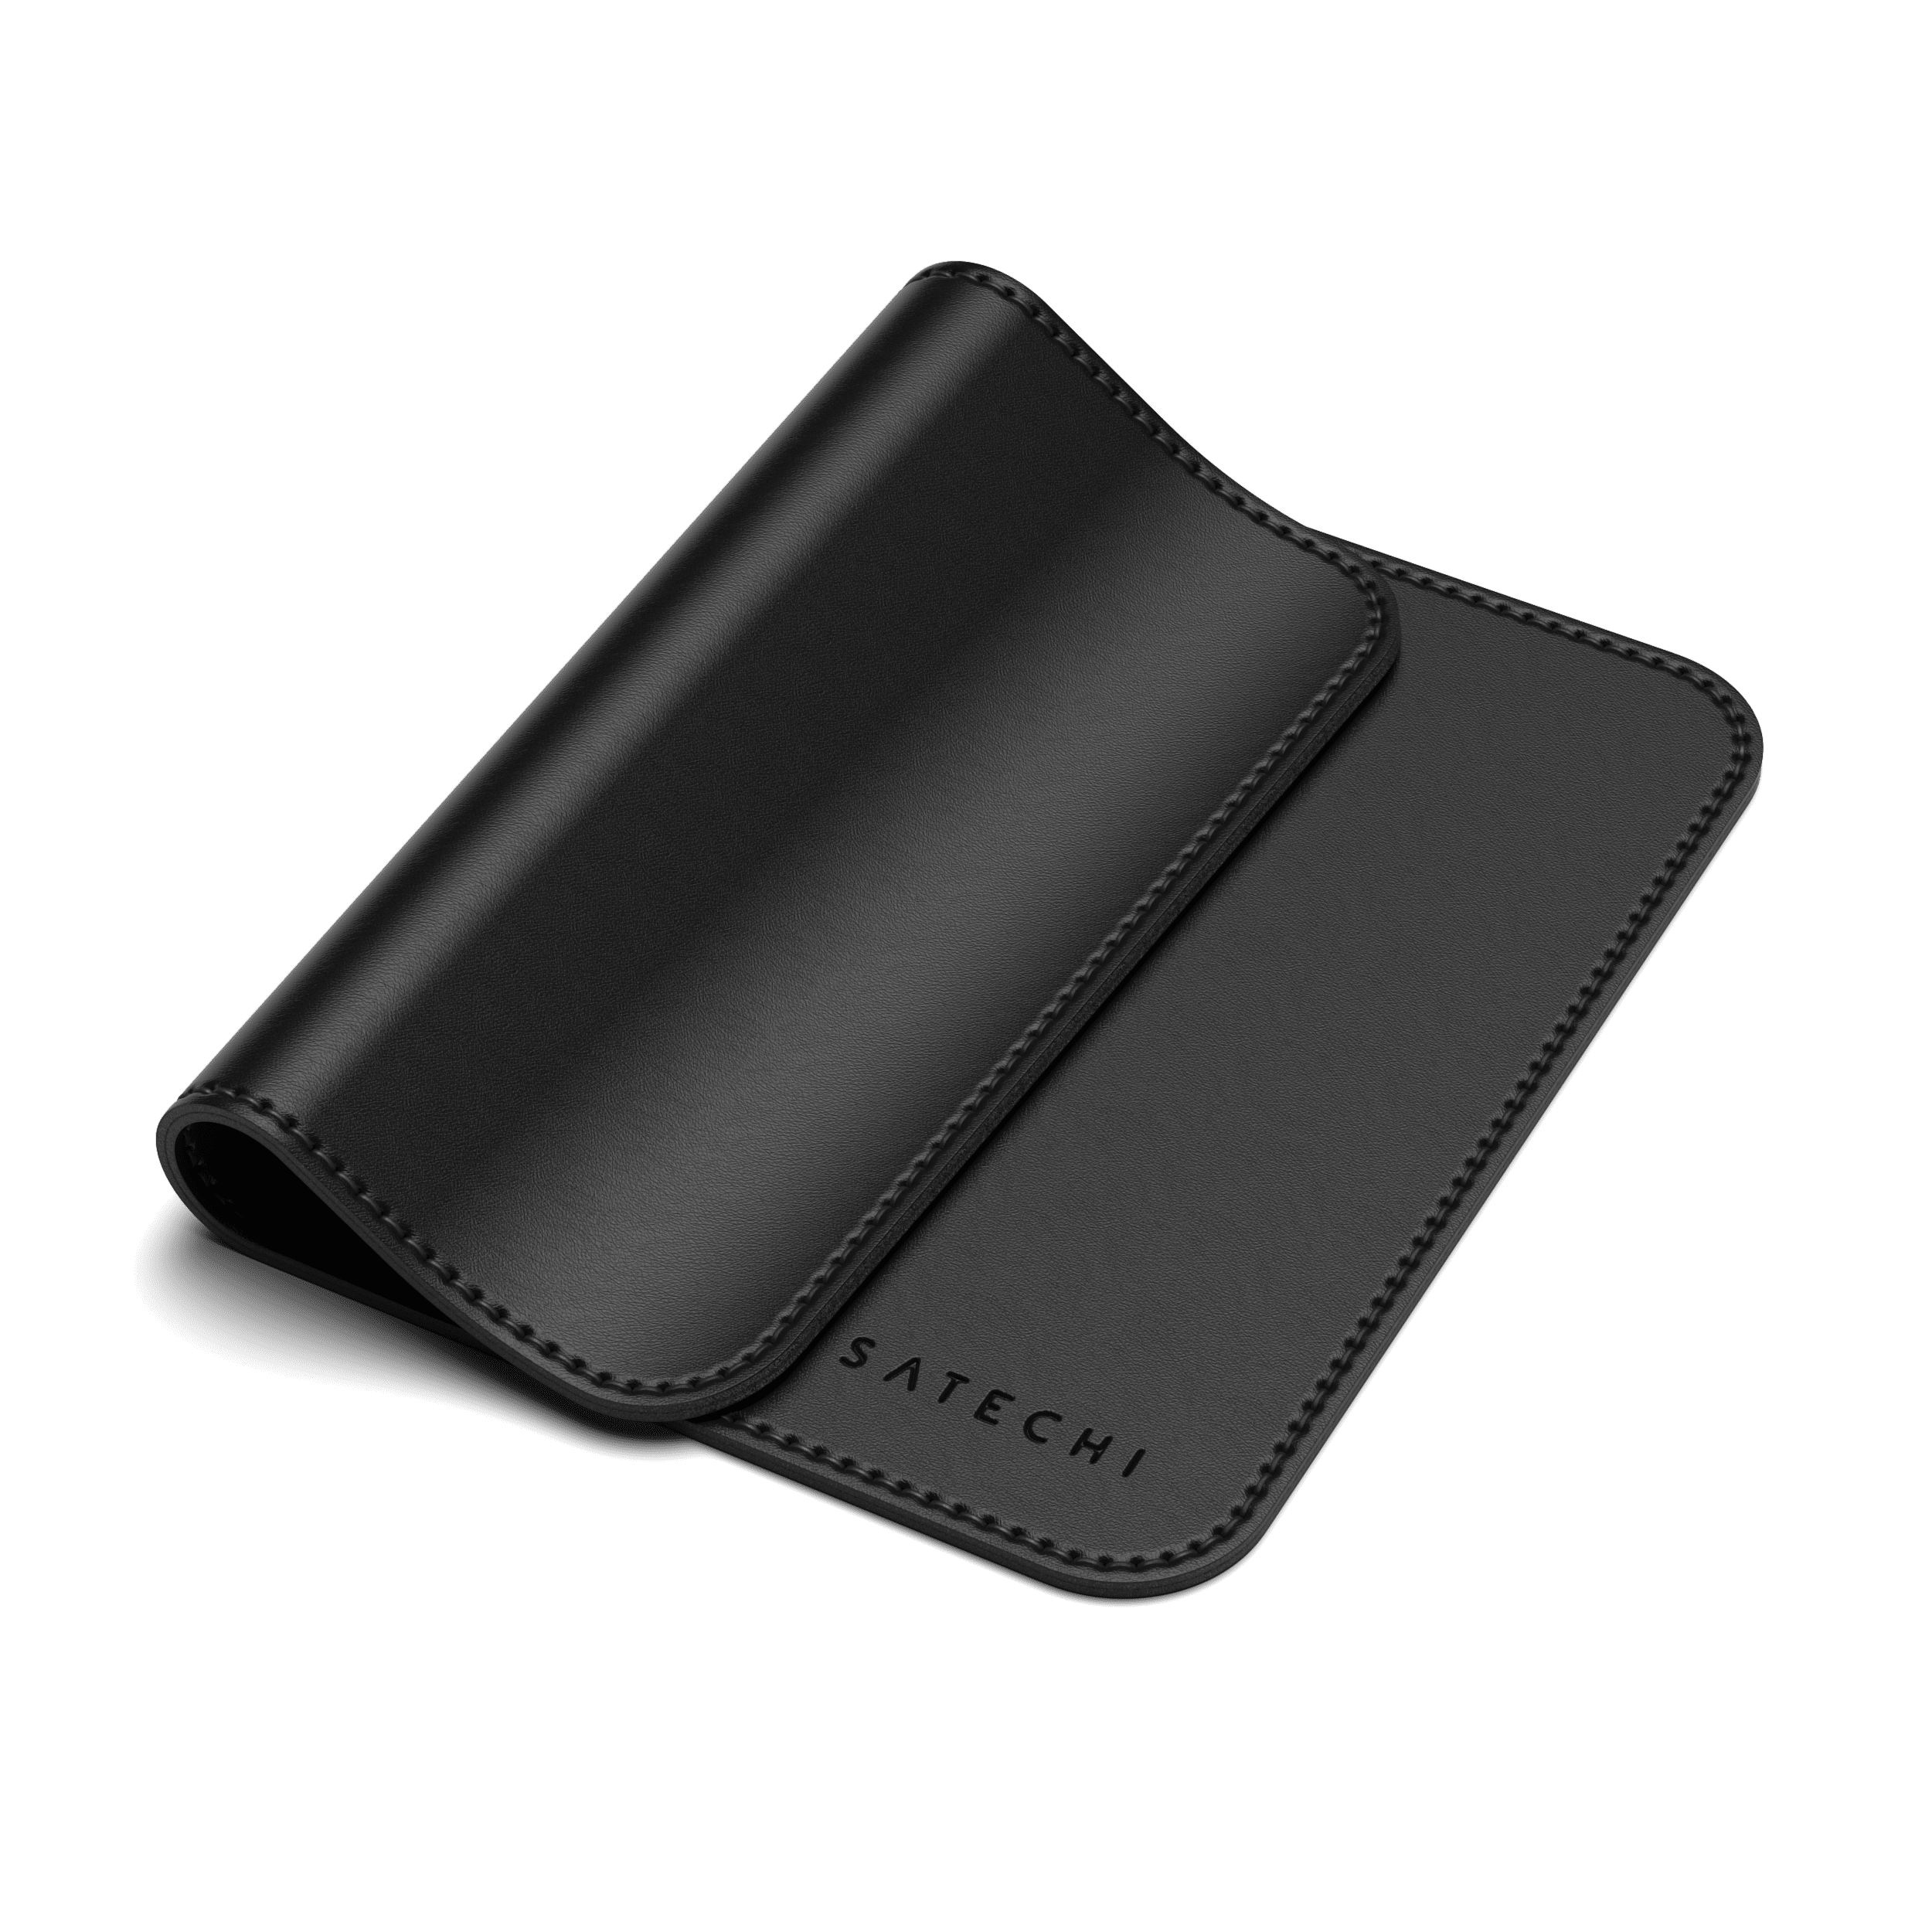 SATECHI Eco Leather Deskmate - Noir - Tapis de souris - Garantie 3